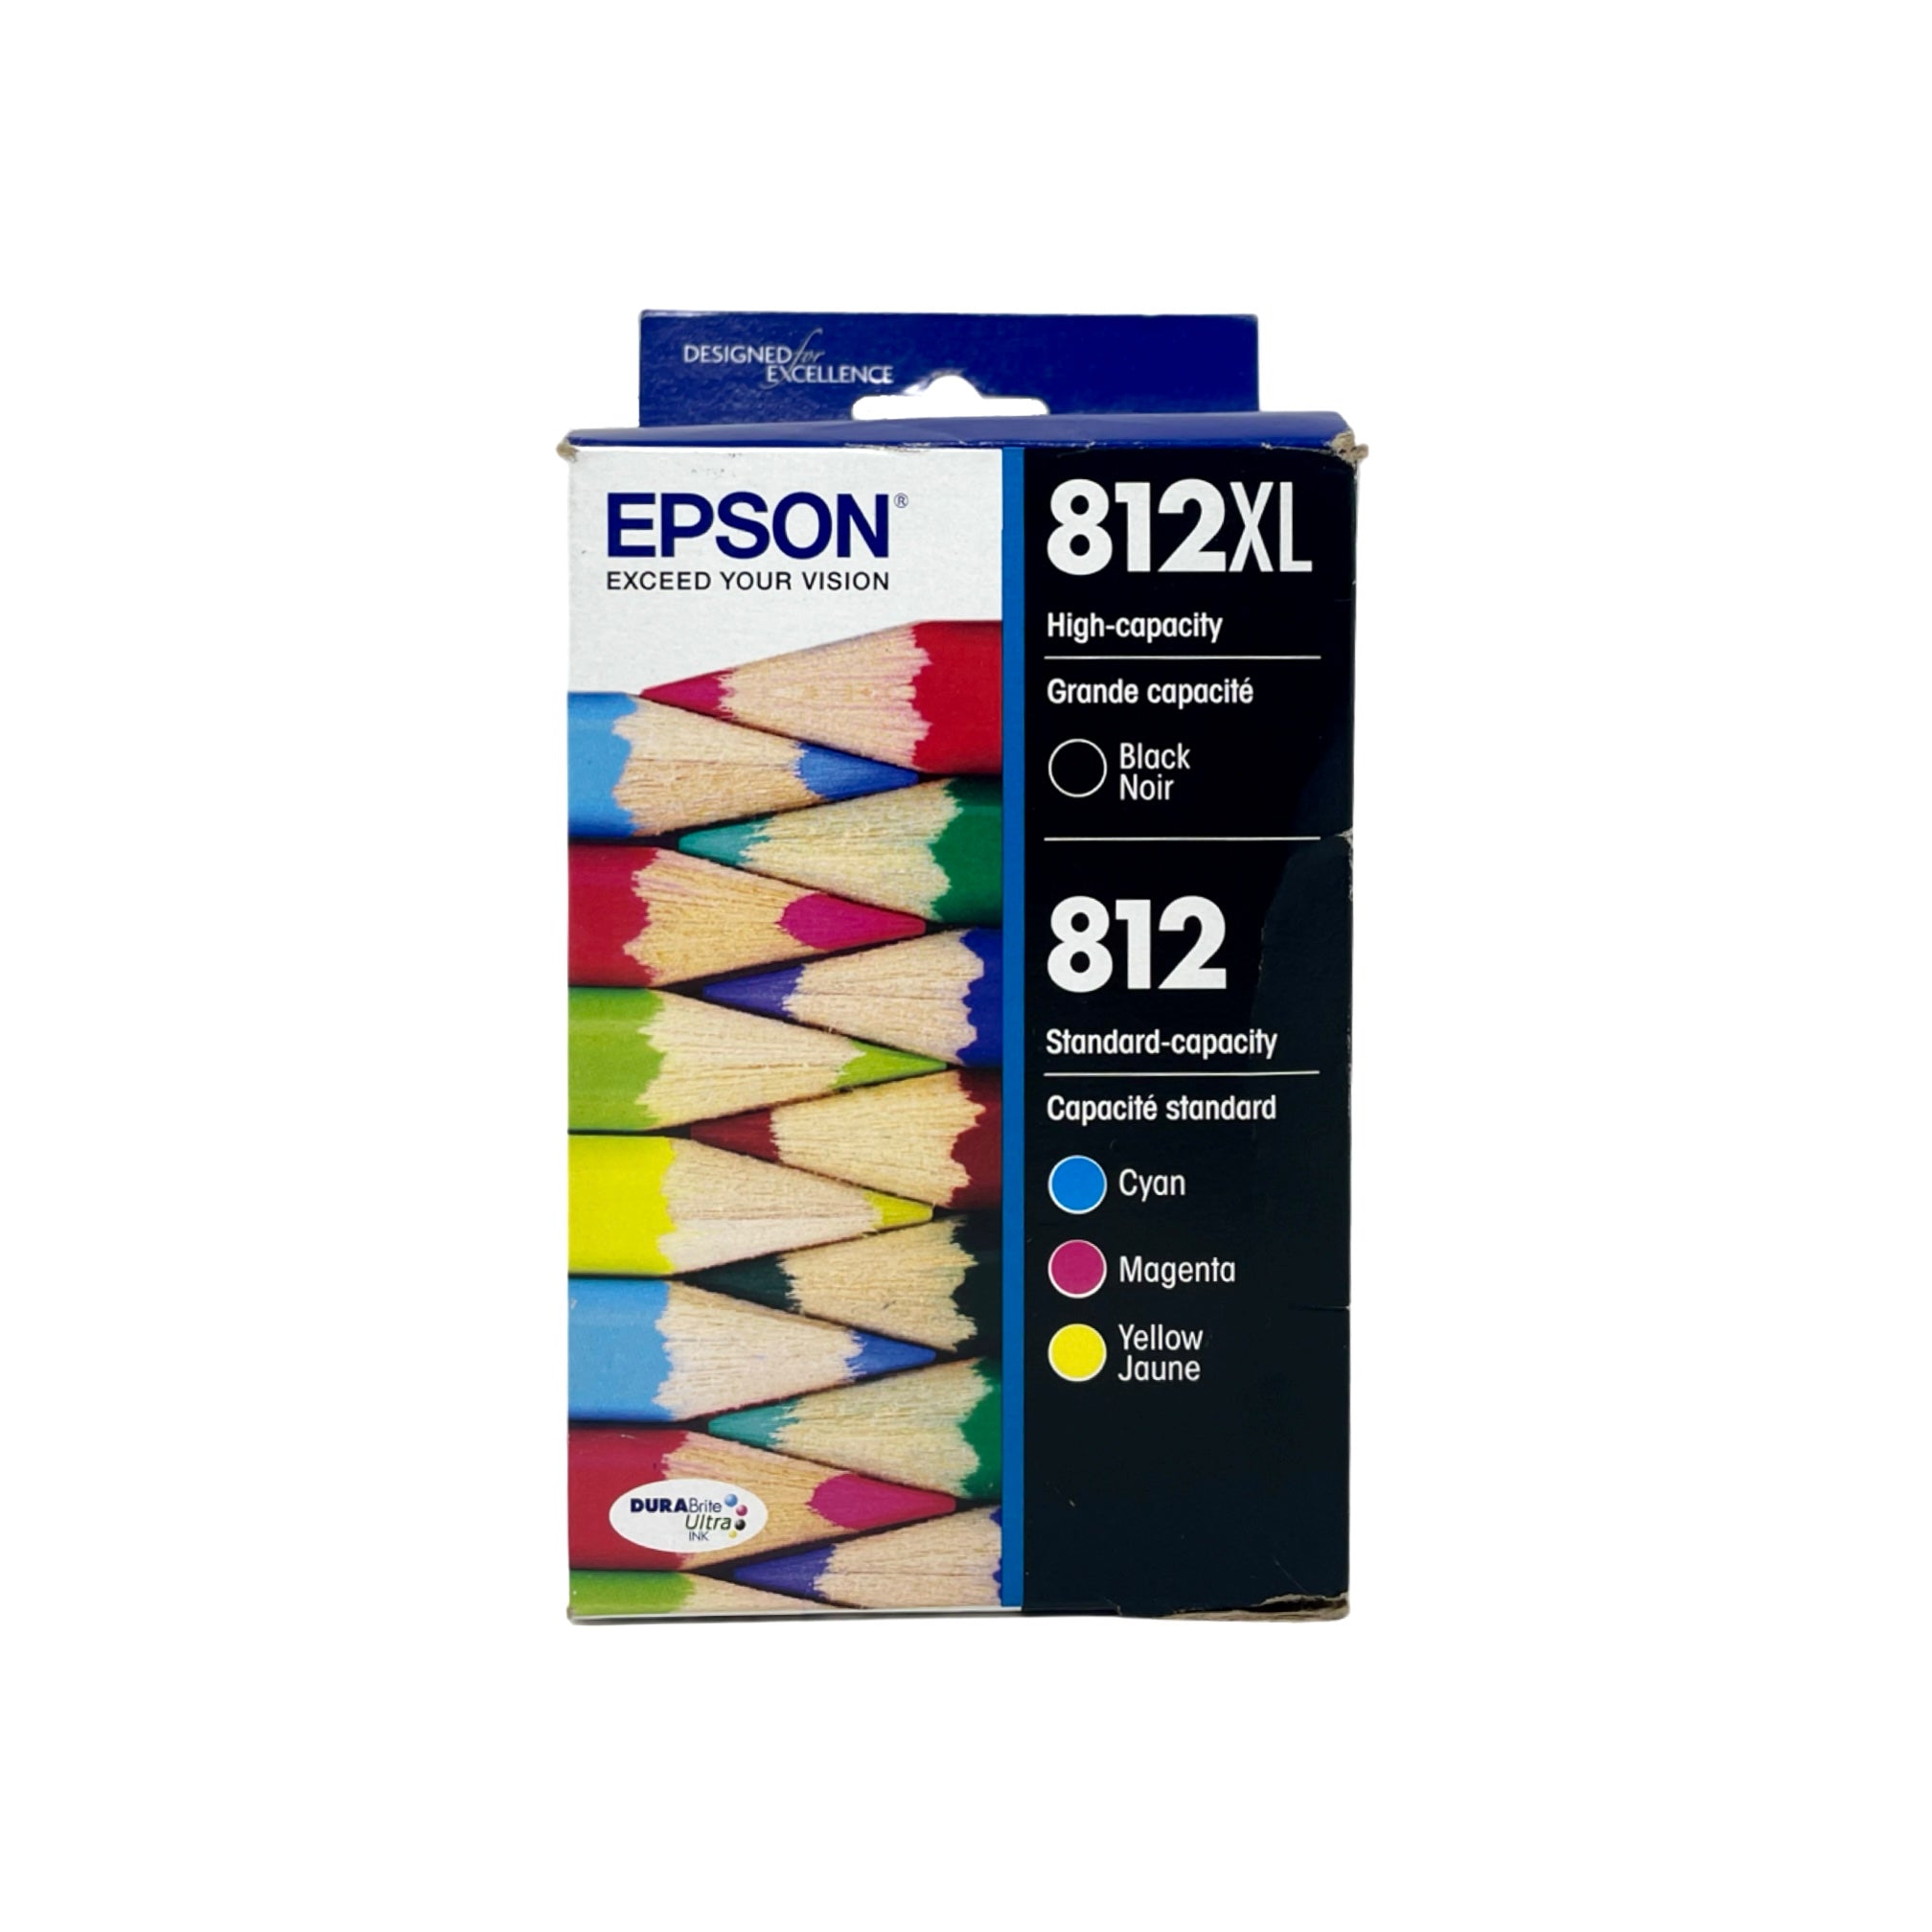 Genuine Epson 812XL/812 4-Pack High-Yield Black/Standard Capacity Multi Ink Cartridges - Cyan/Magenta/Yellow/Black (T812XL-BCS)